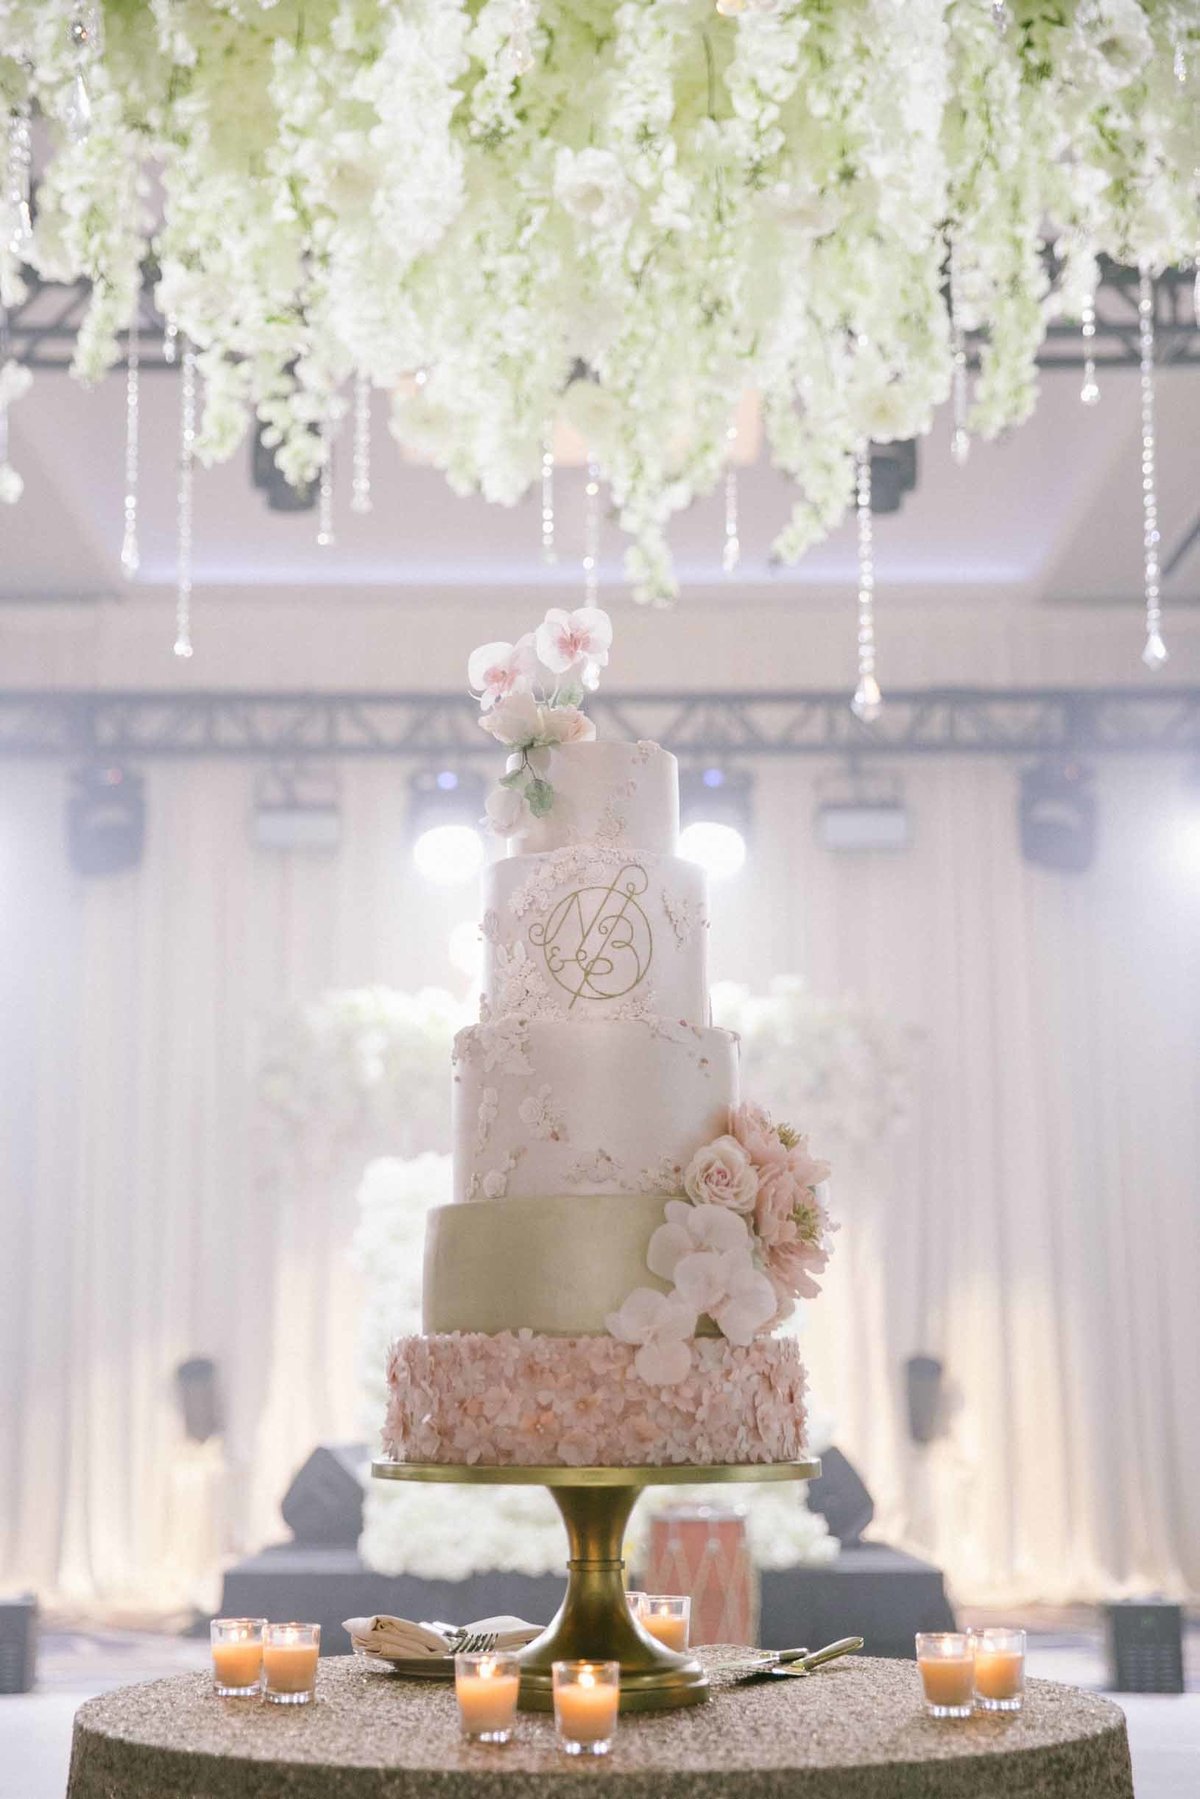 Beautiful pink and cream wedding cake underneath white floral instillation